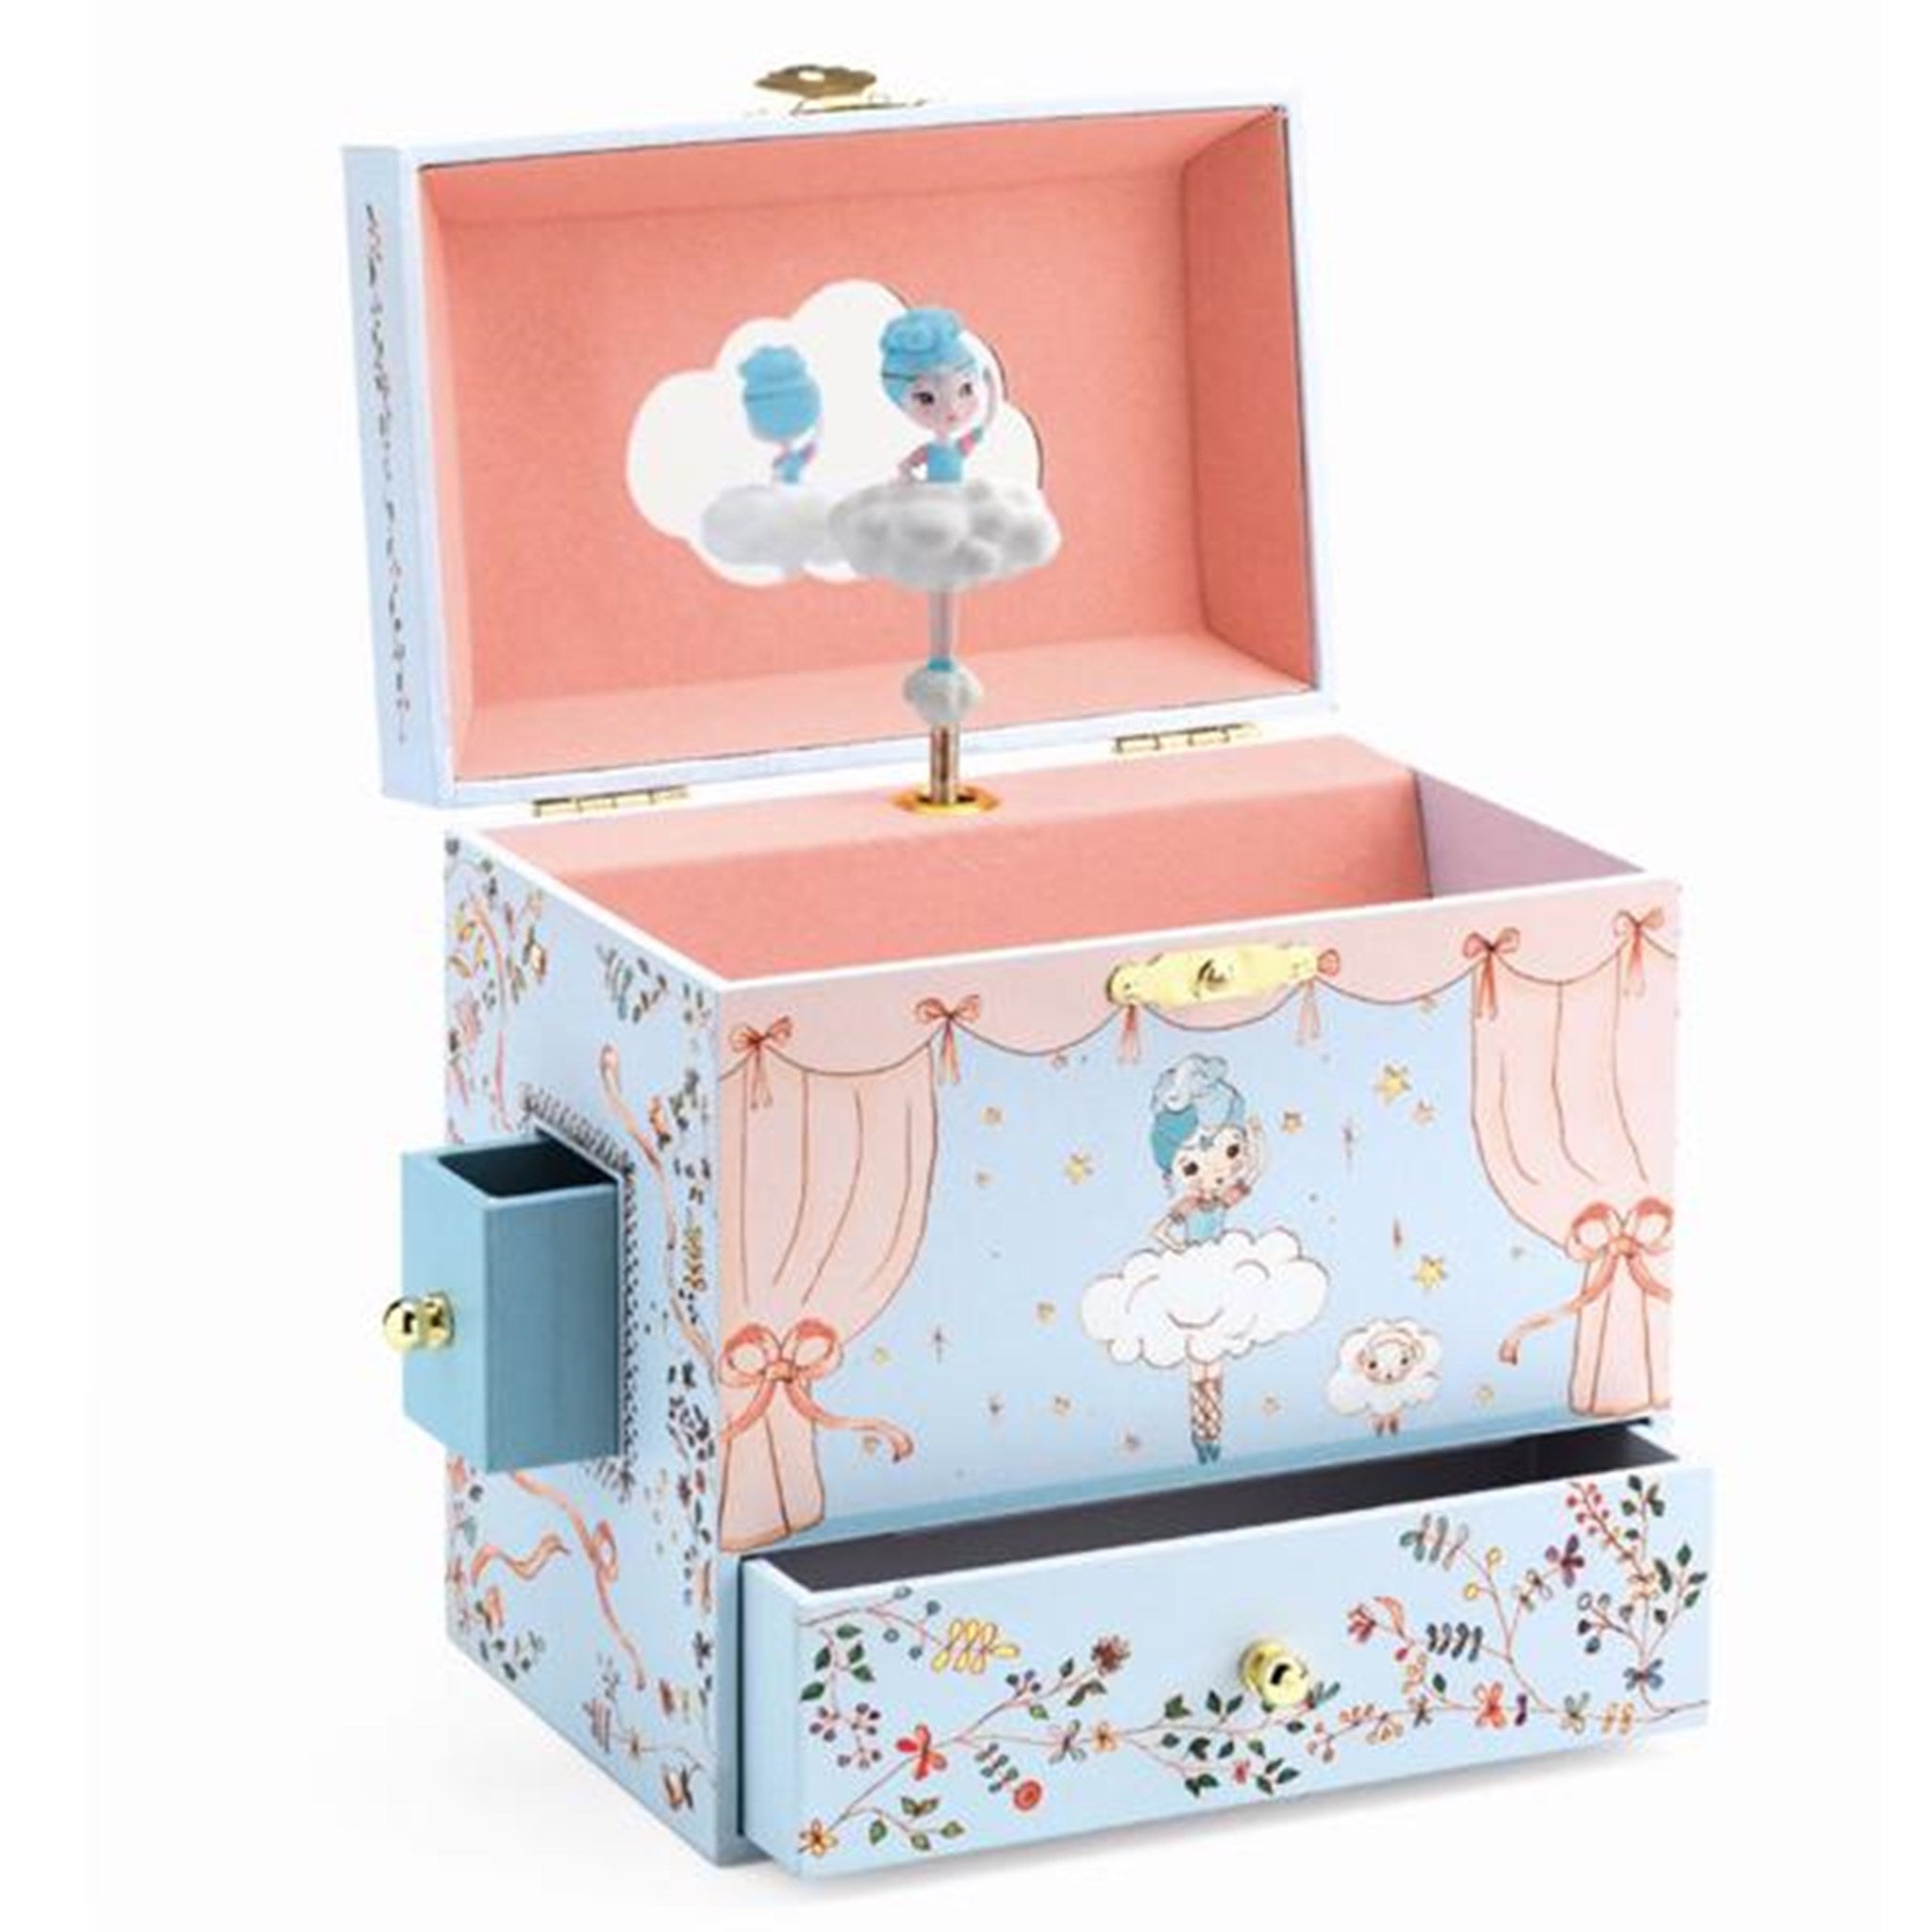 Djeco Jewelry Box With Music Ballerina